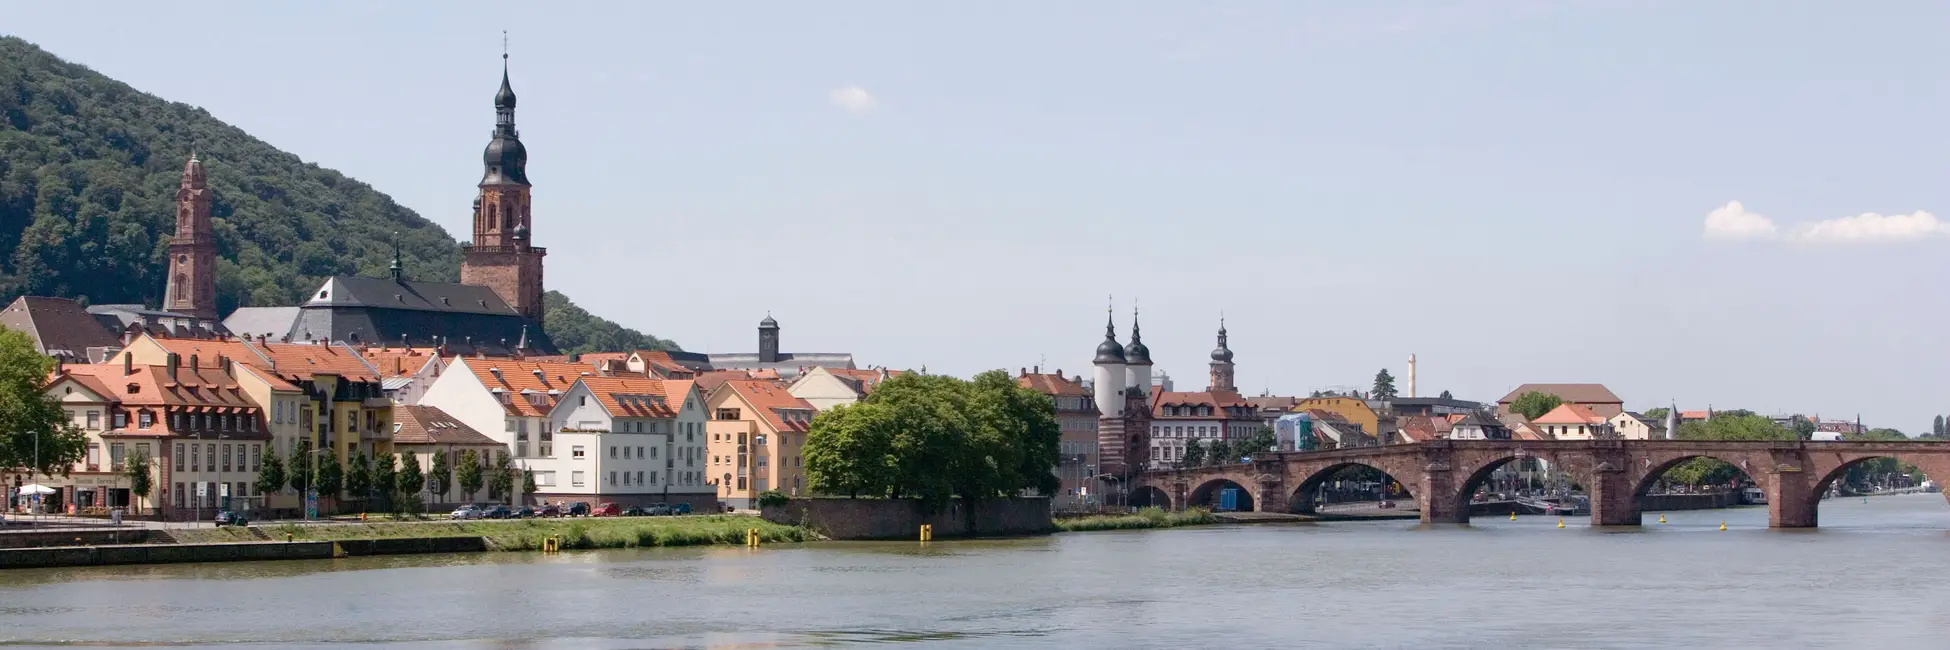 Le Neckar à Heidelberg 